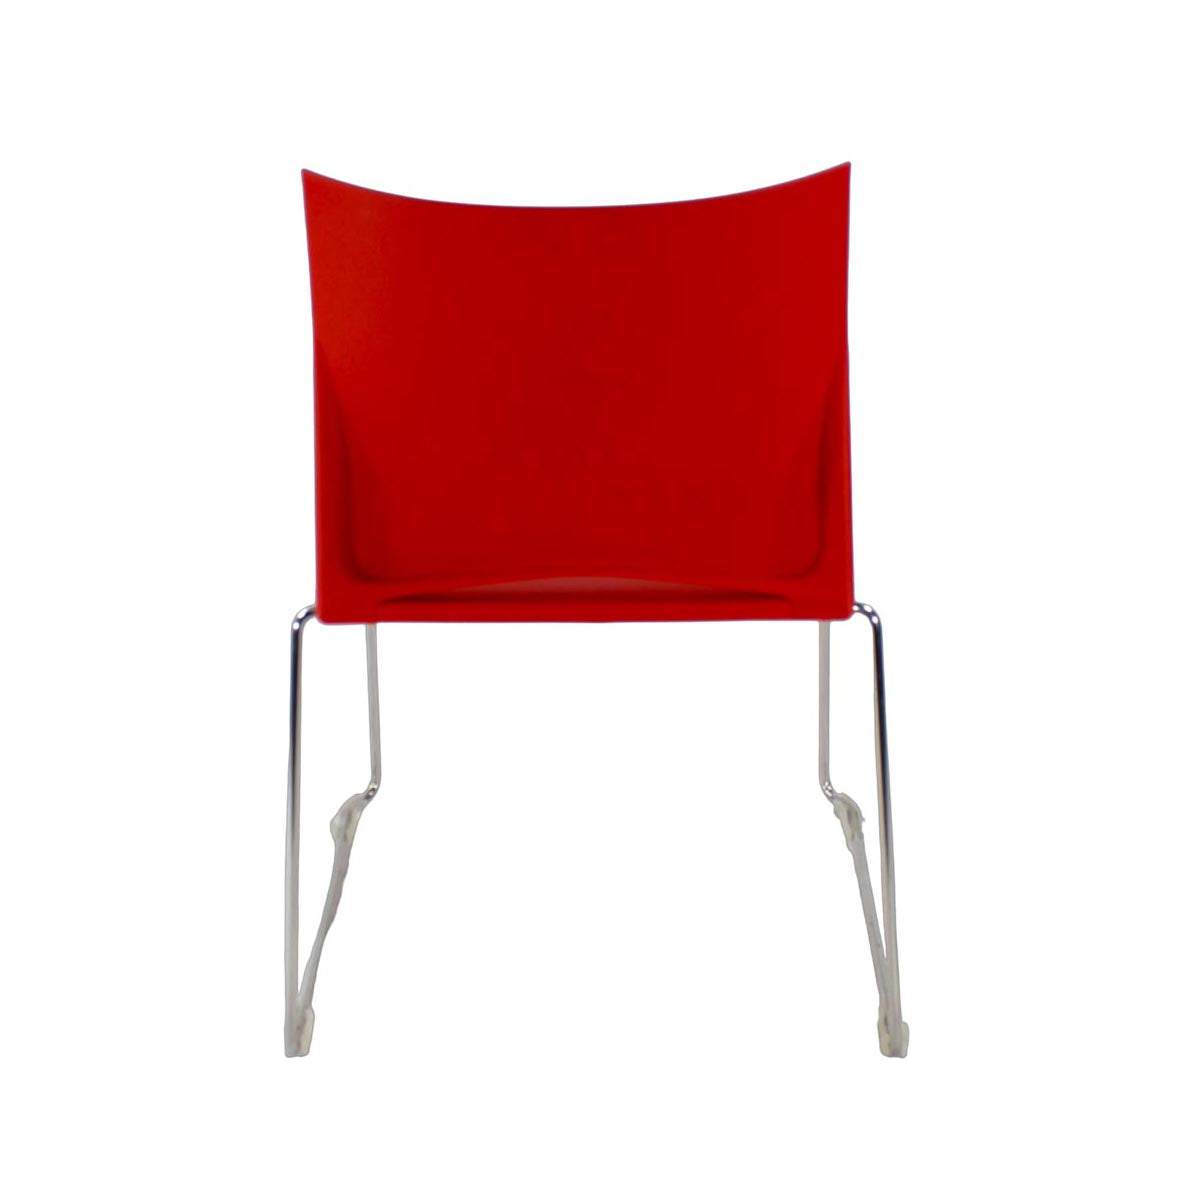 Herman Miller: sedia impilabile Pronta rossa - rinnovata